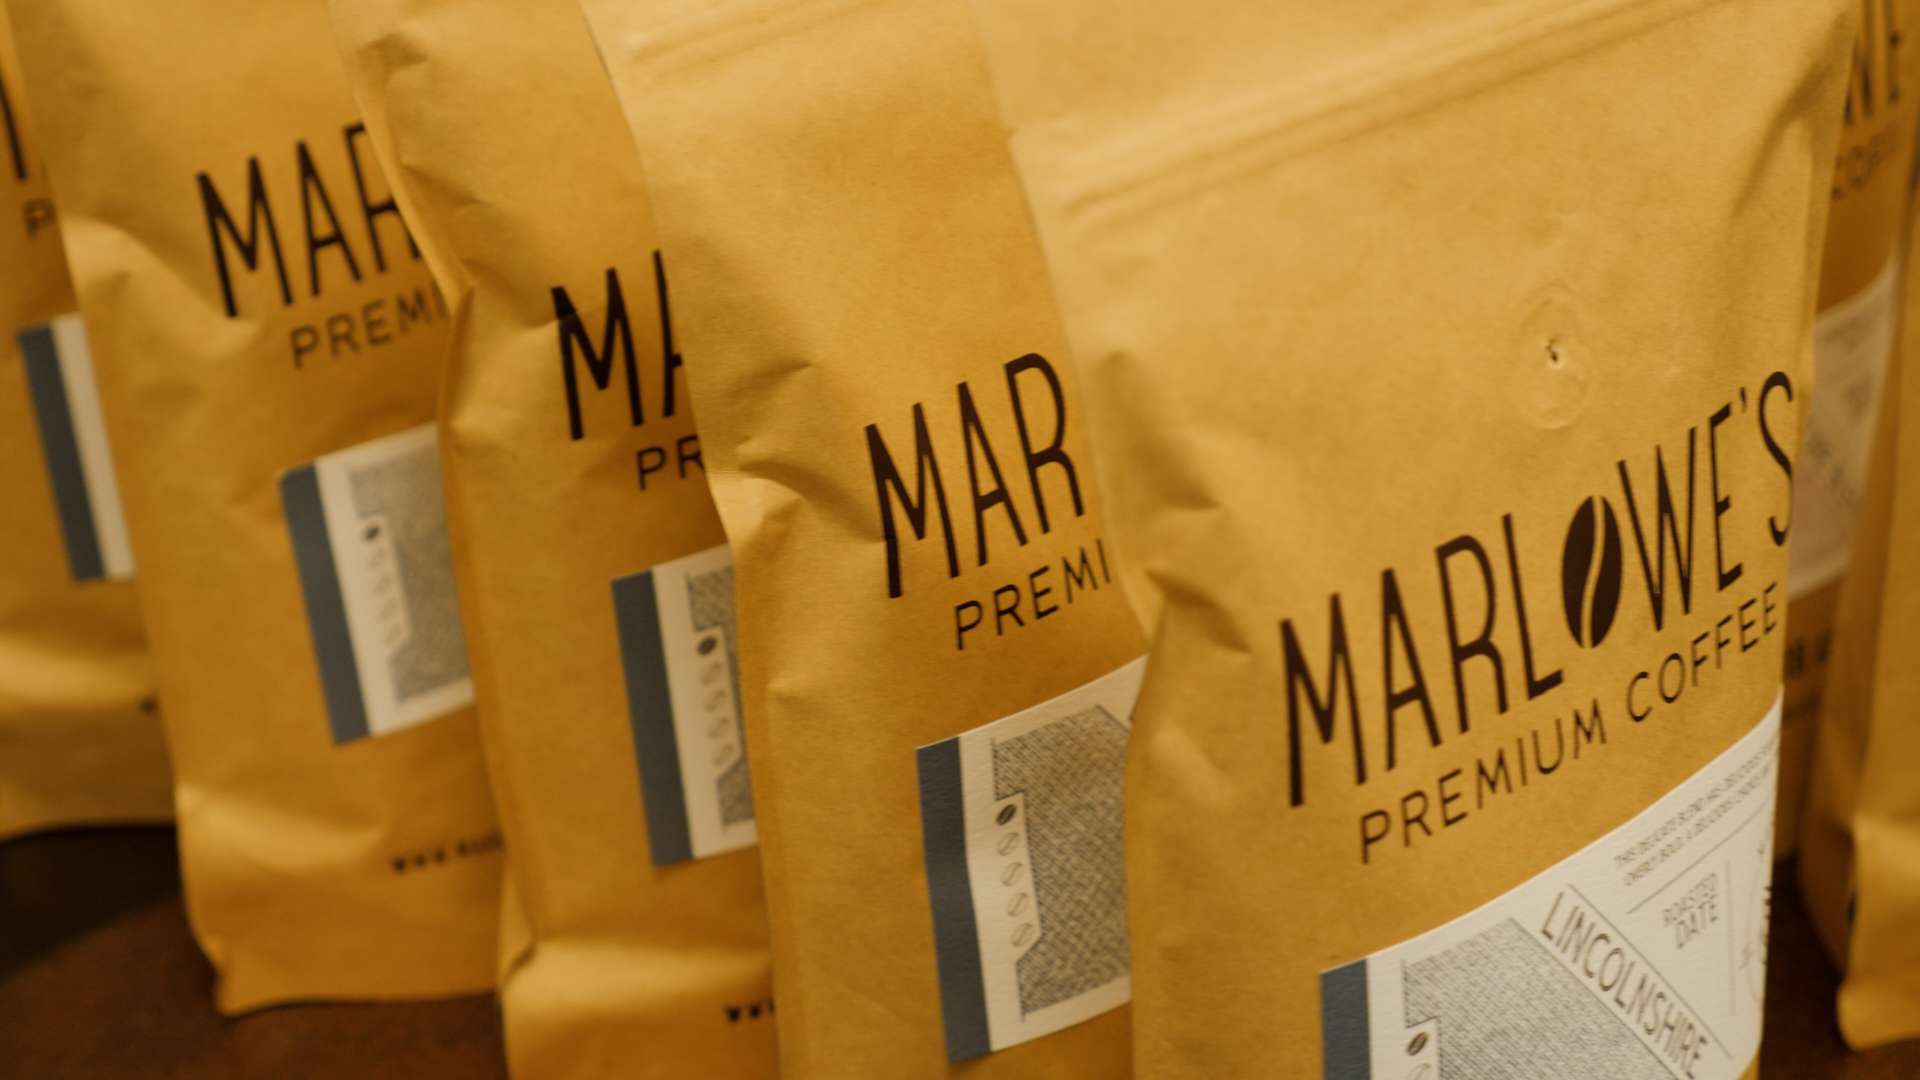 Marlowe's Premium Coffee